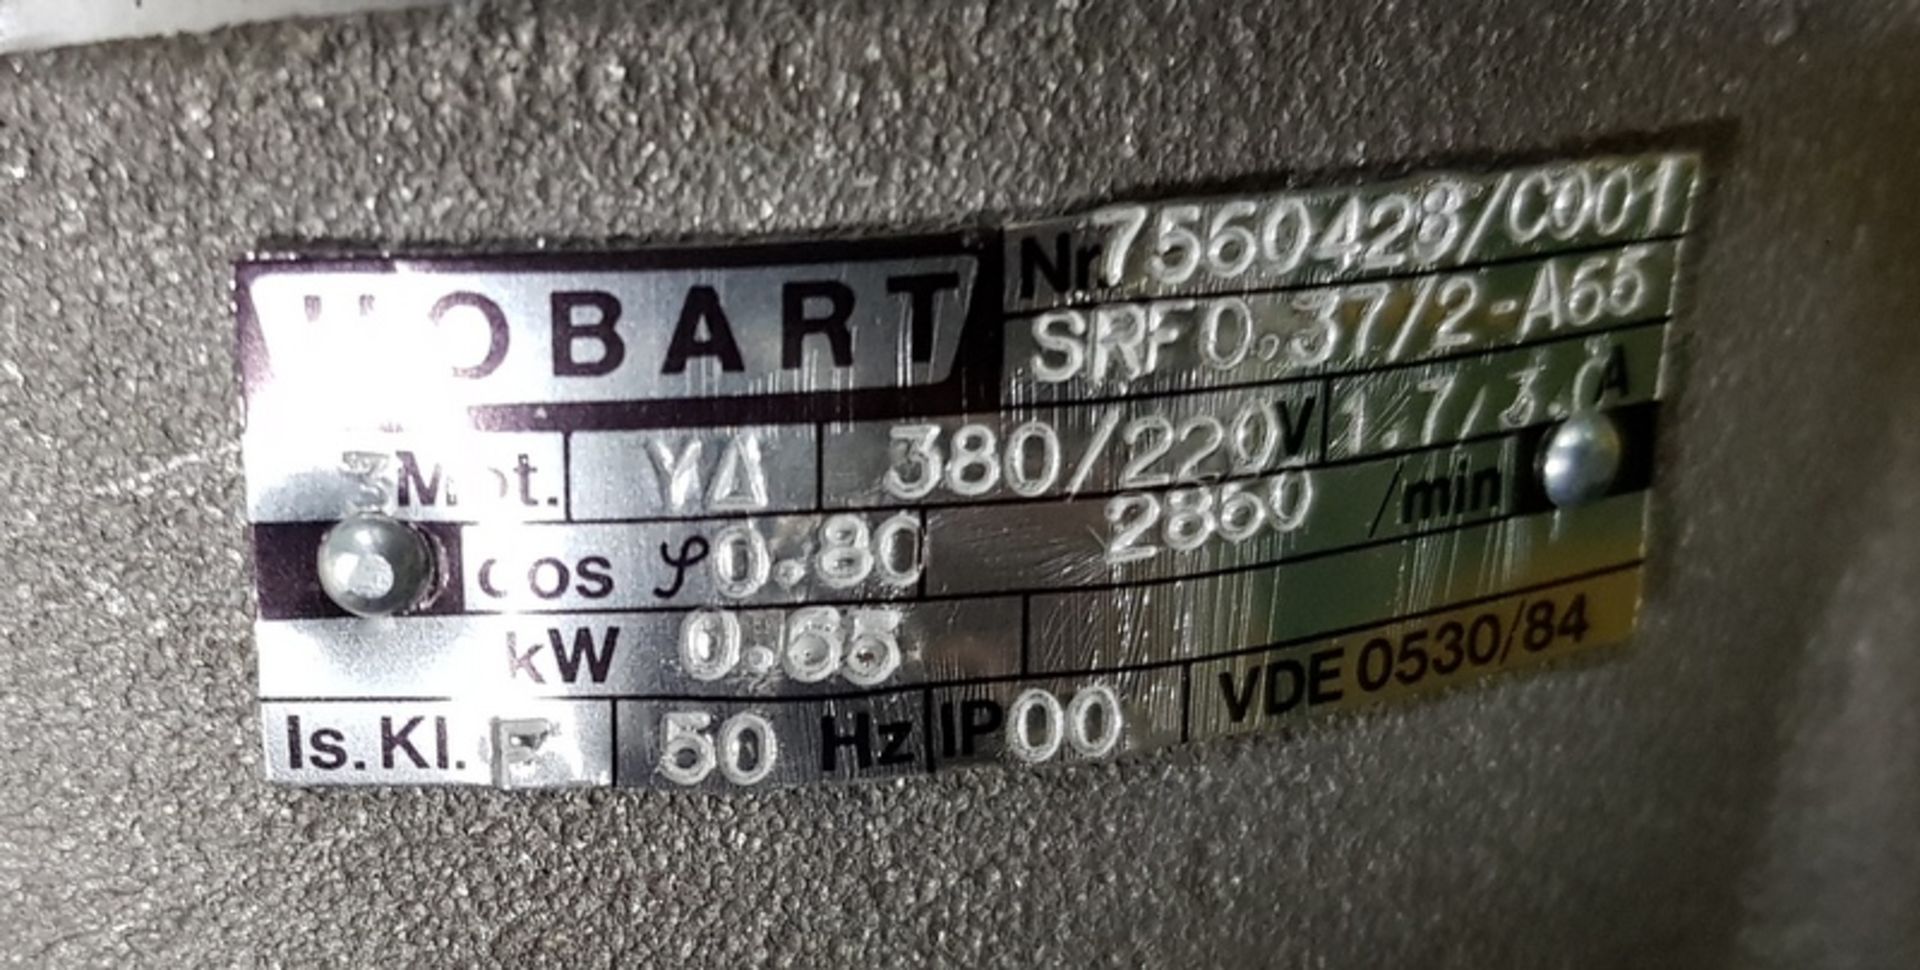 Hobart 226776-5-Pump - Image 3 of 3